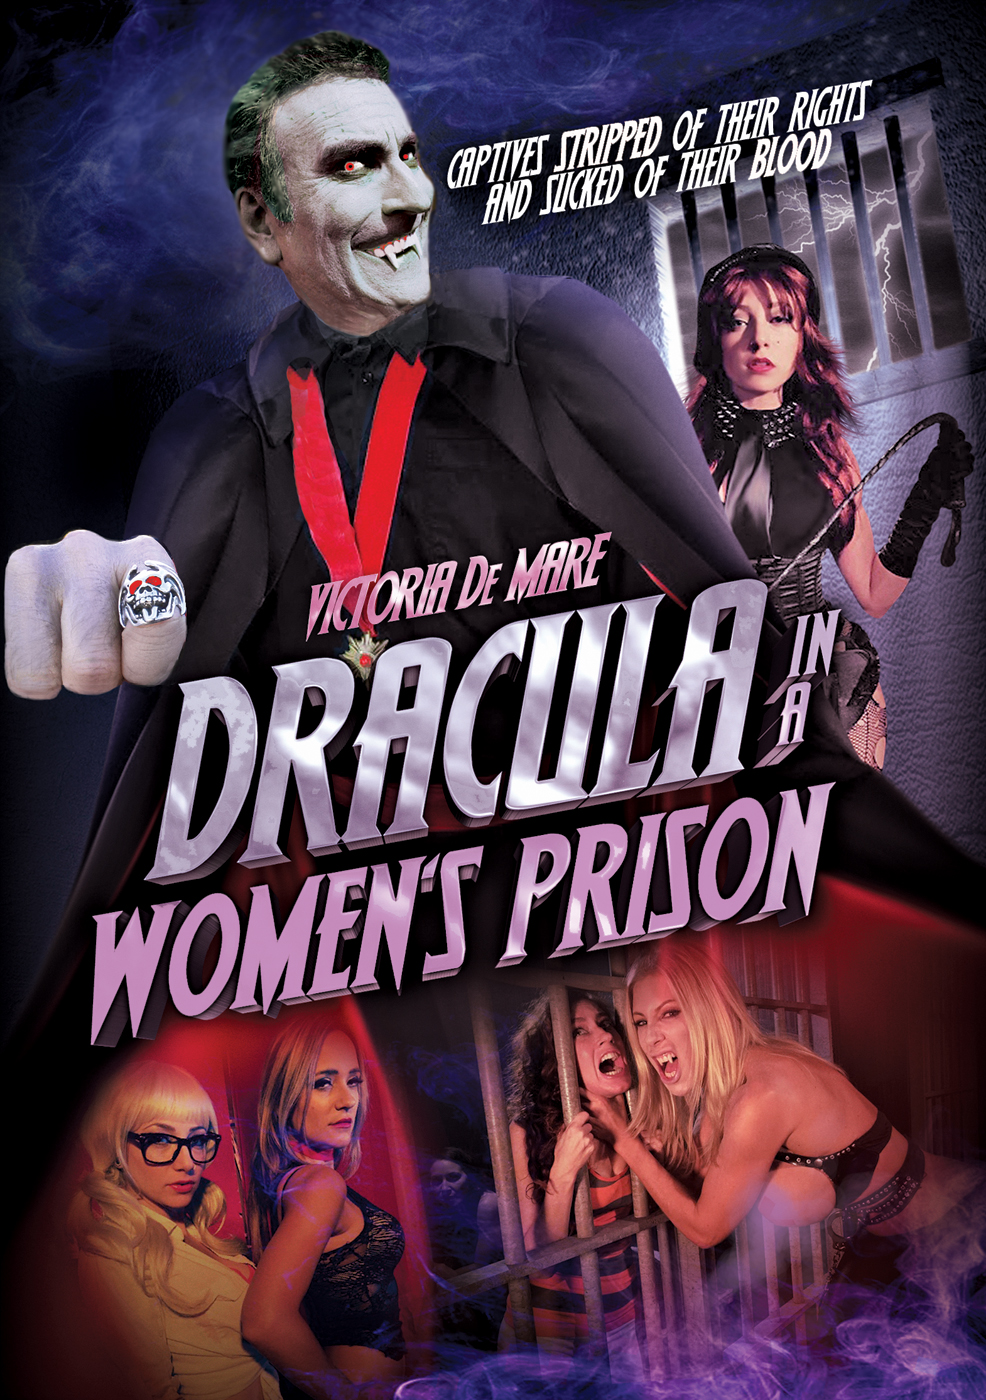 Dracula in a Women's Prison (2017) starring Victoria De Mare on DVD on DVD